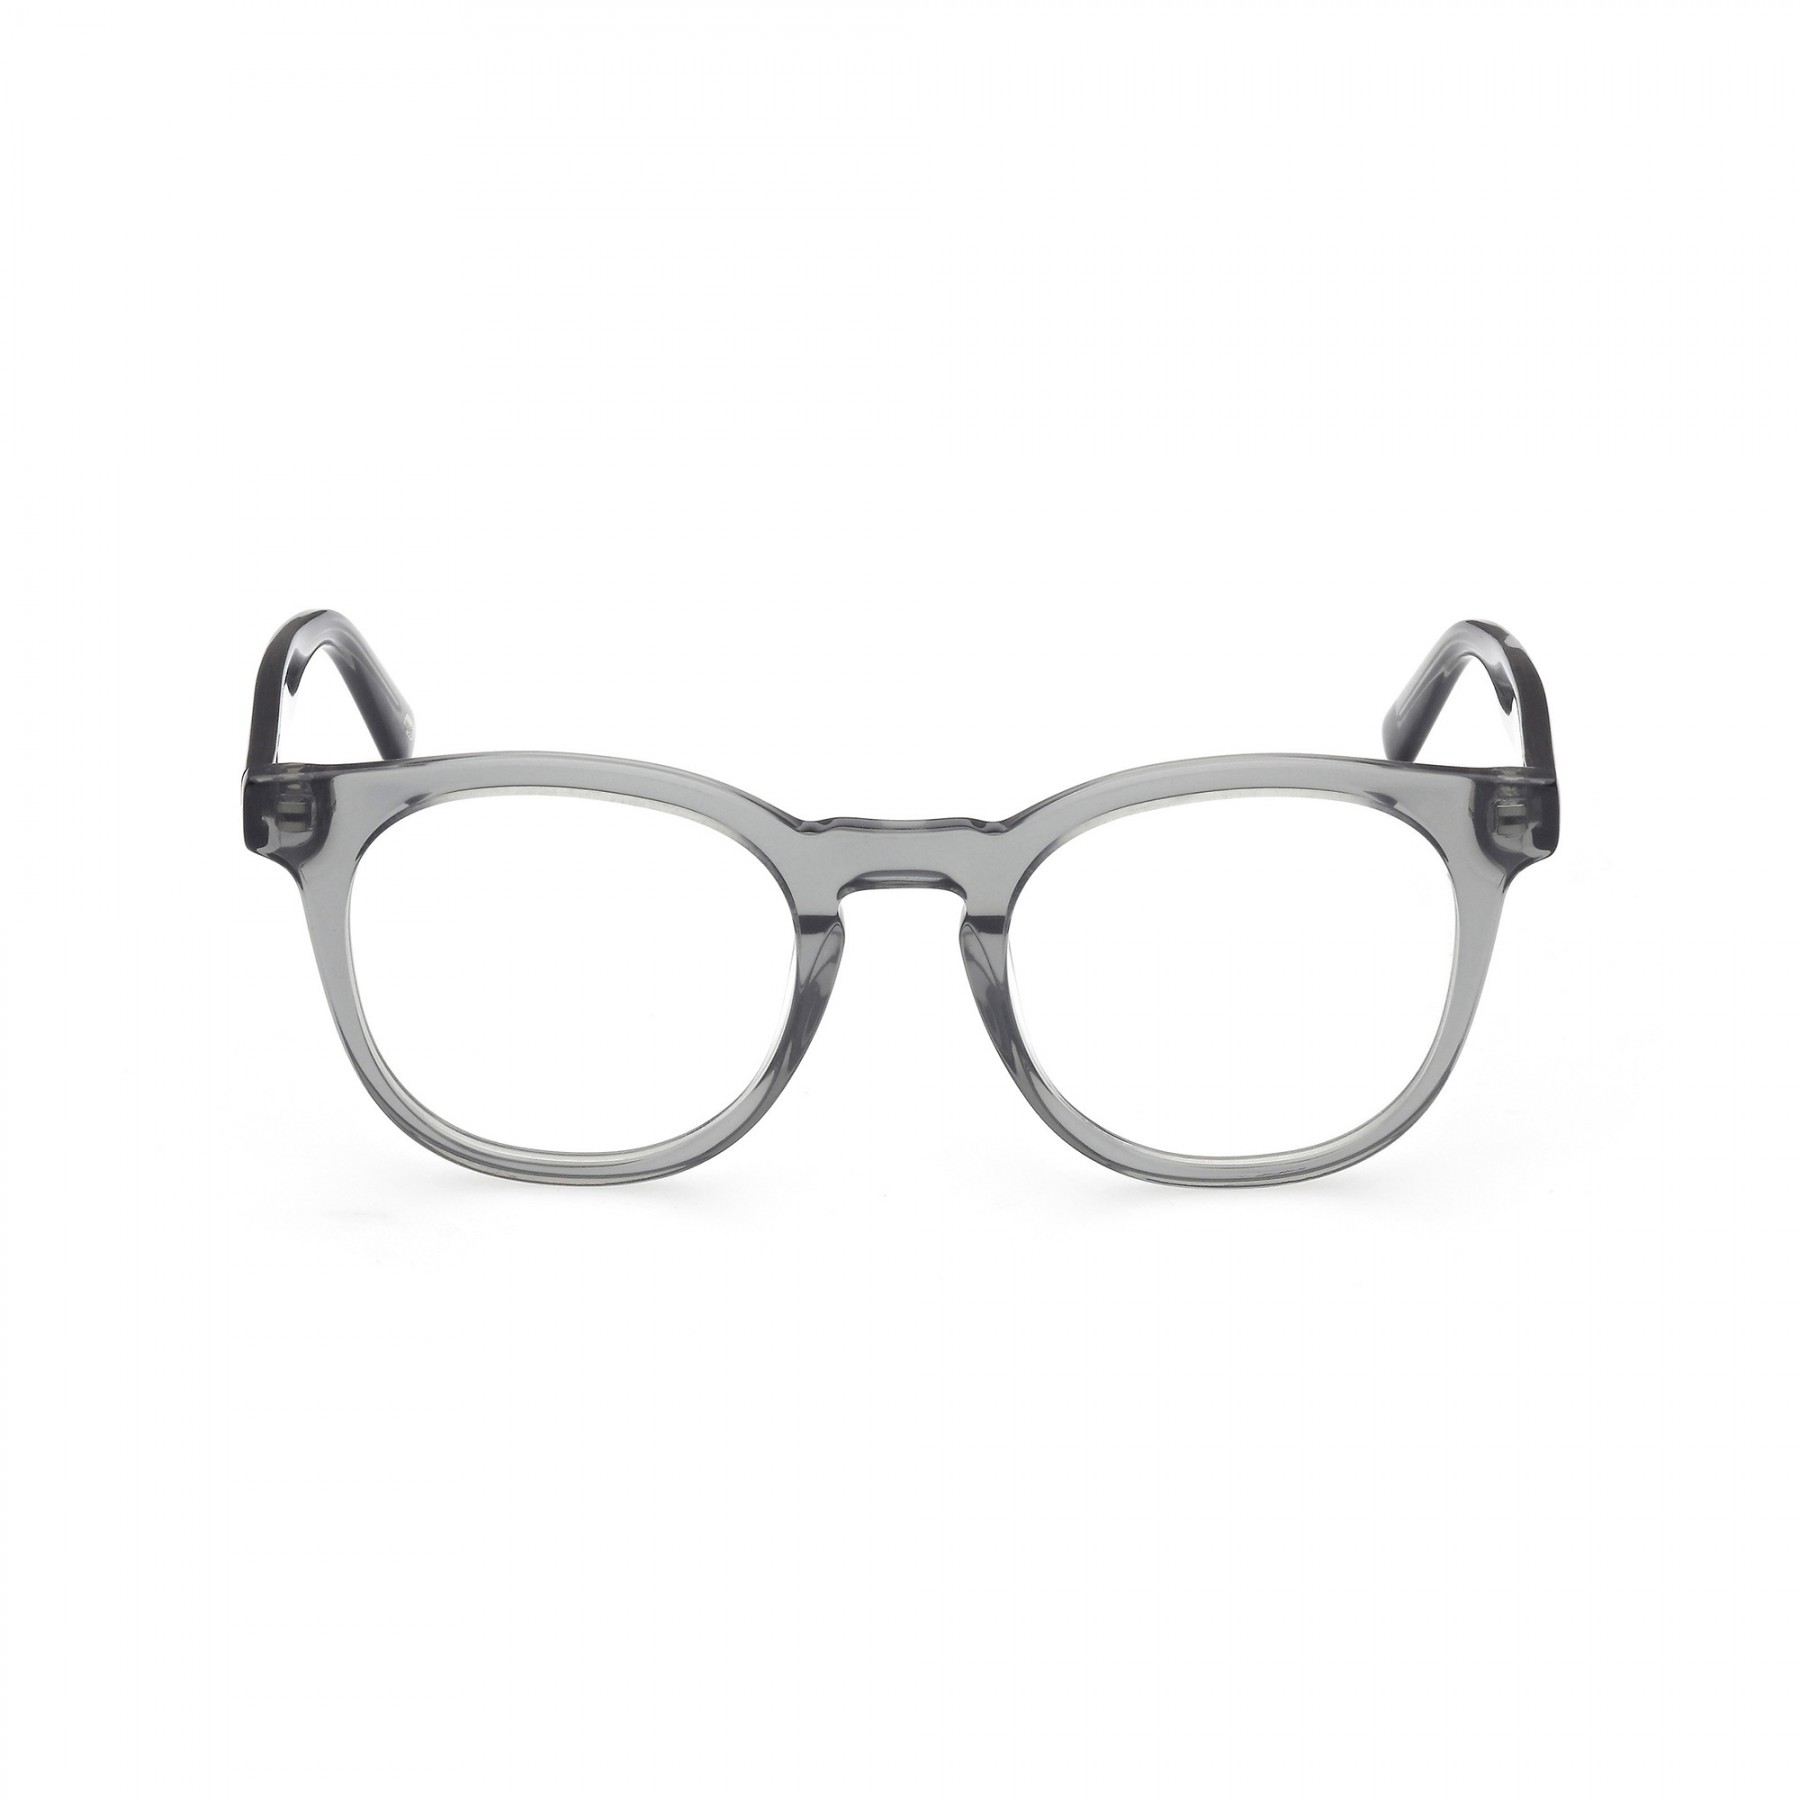 Web 5373 020 - Oculos de Grau